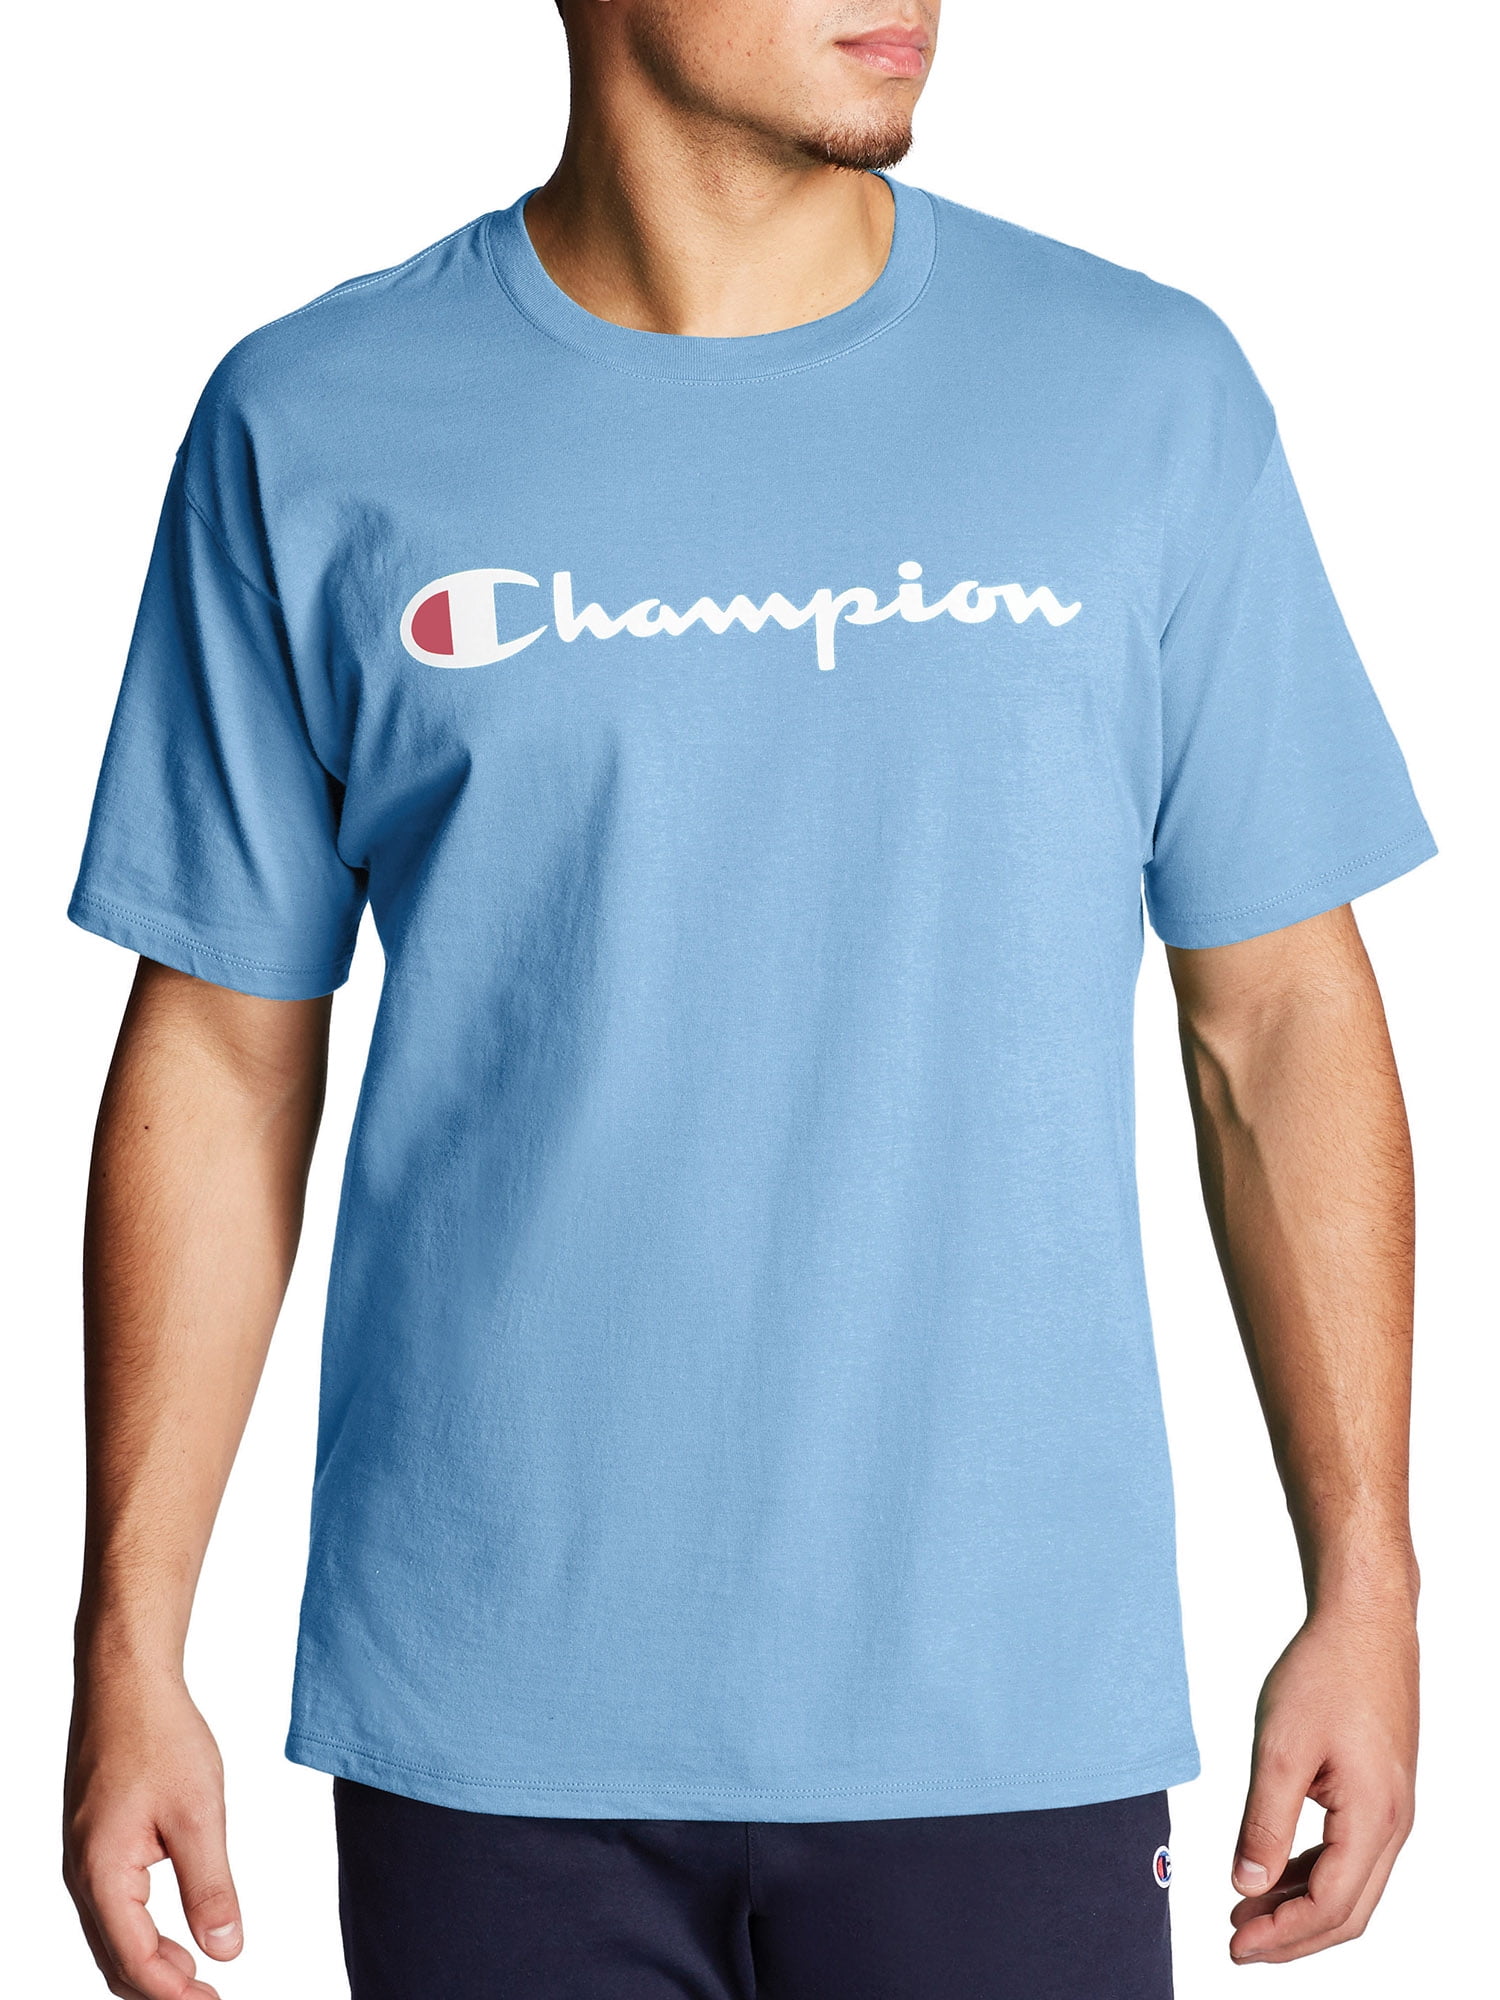 swiss blue champion t shirt